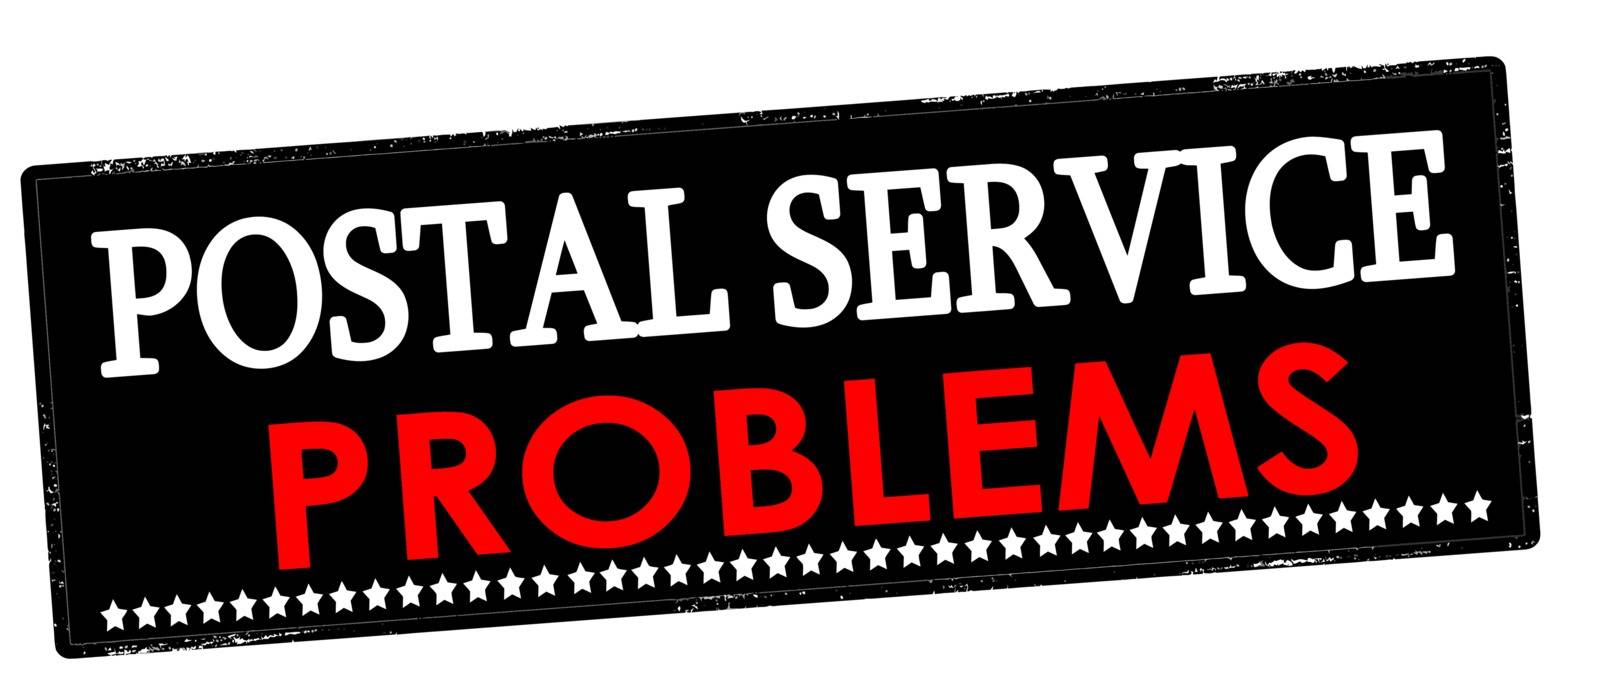 Portal service problems by carmenbobo